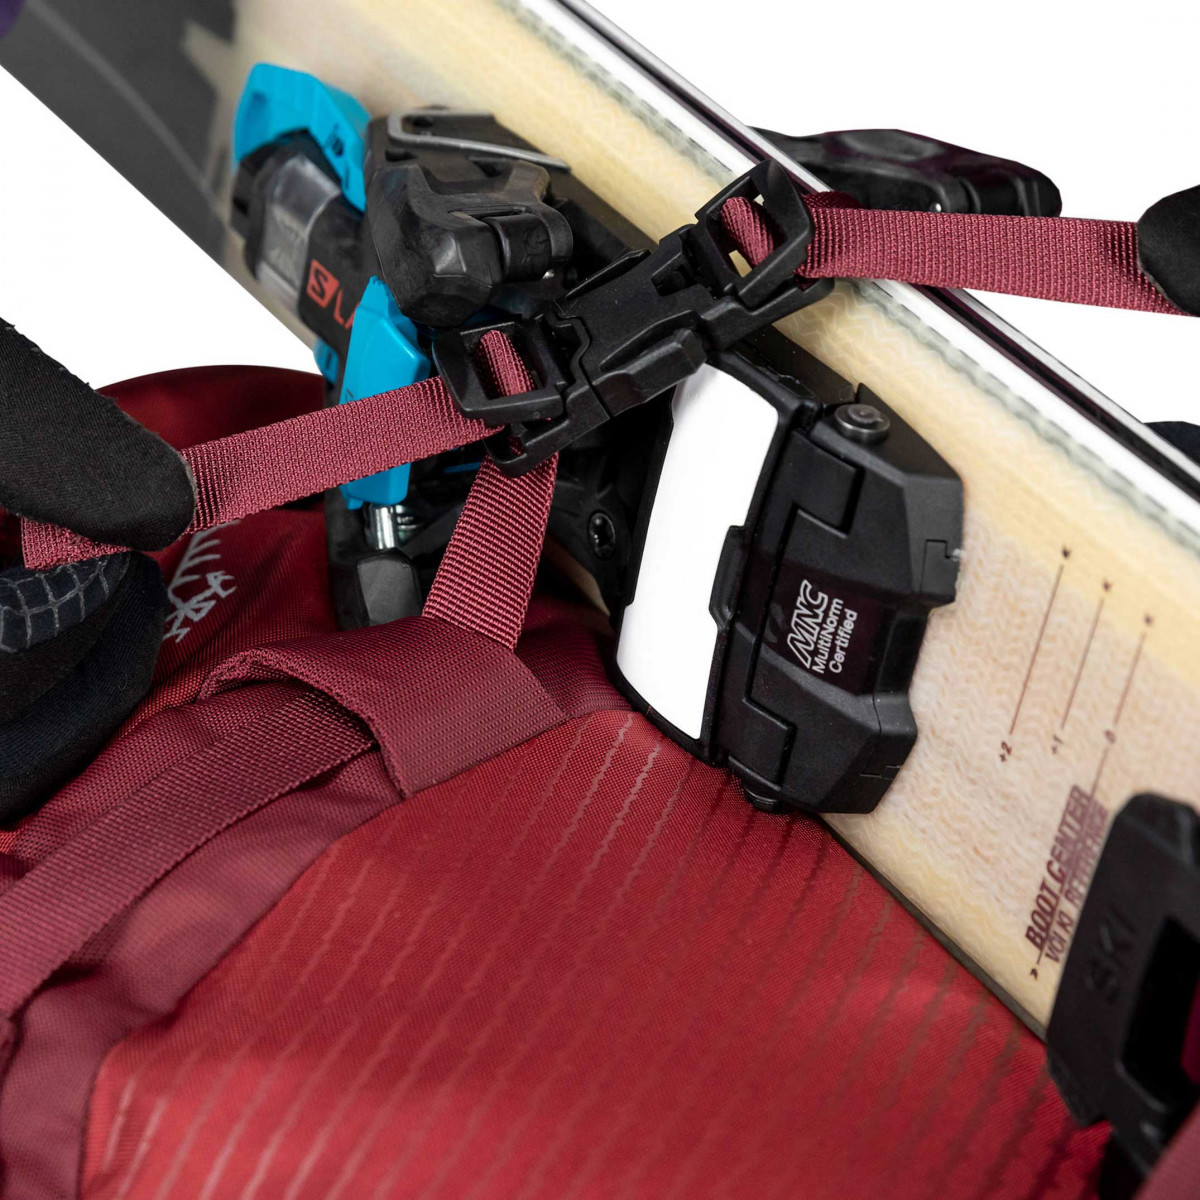 Osprey Kresta 14 Ski/Snowboard Backpack